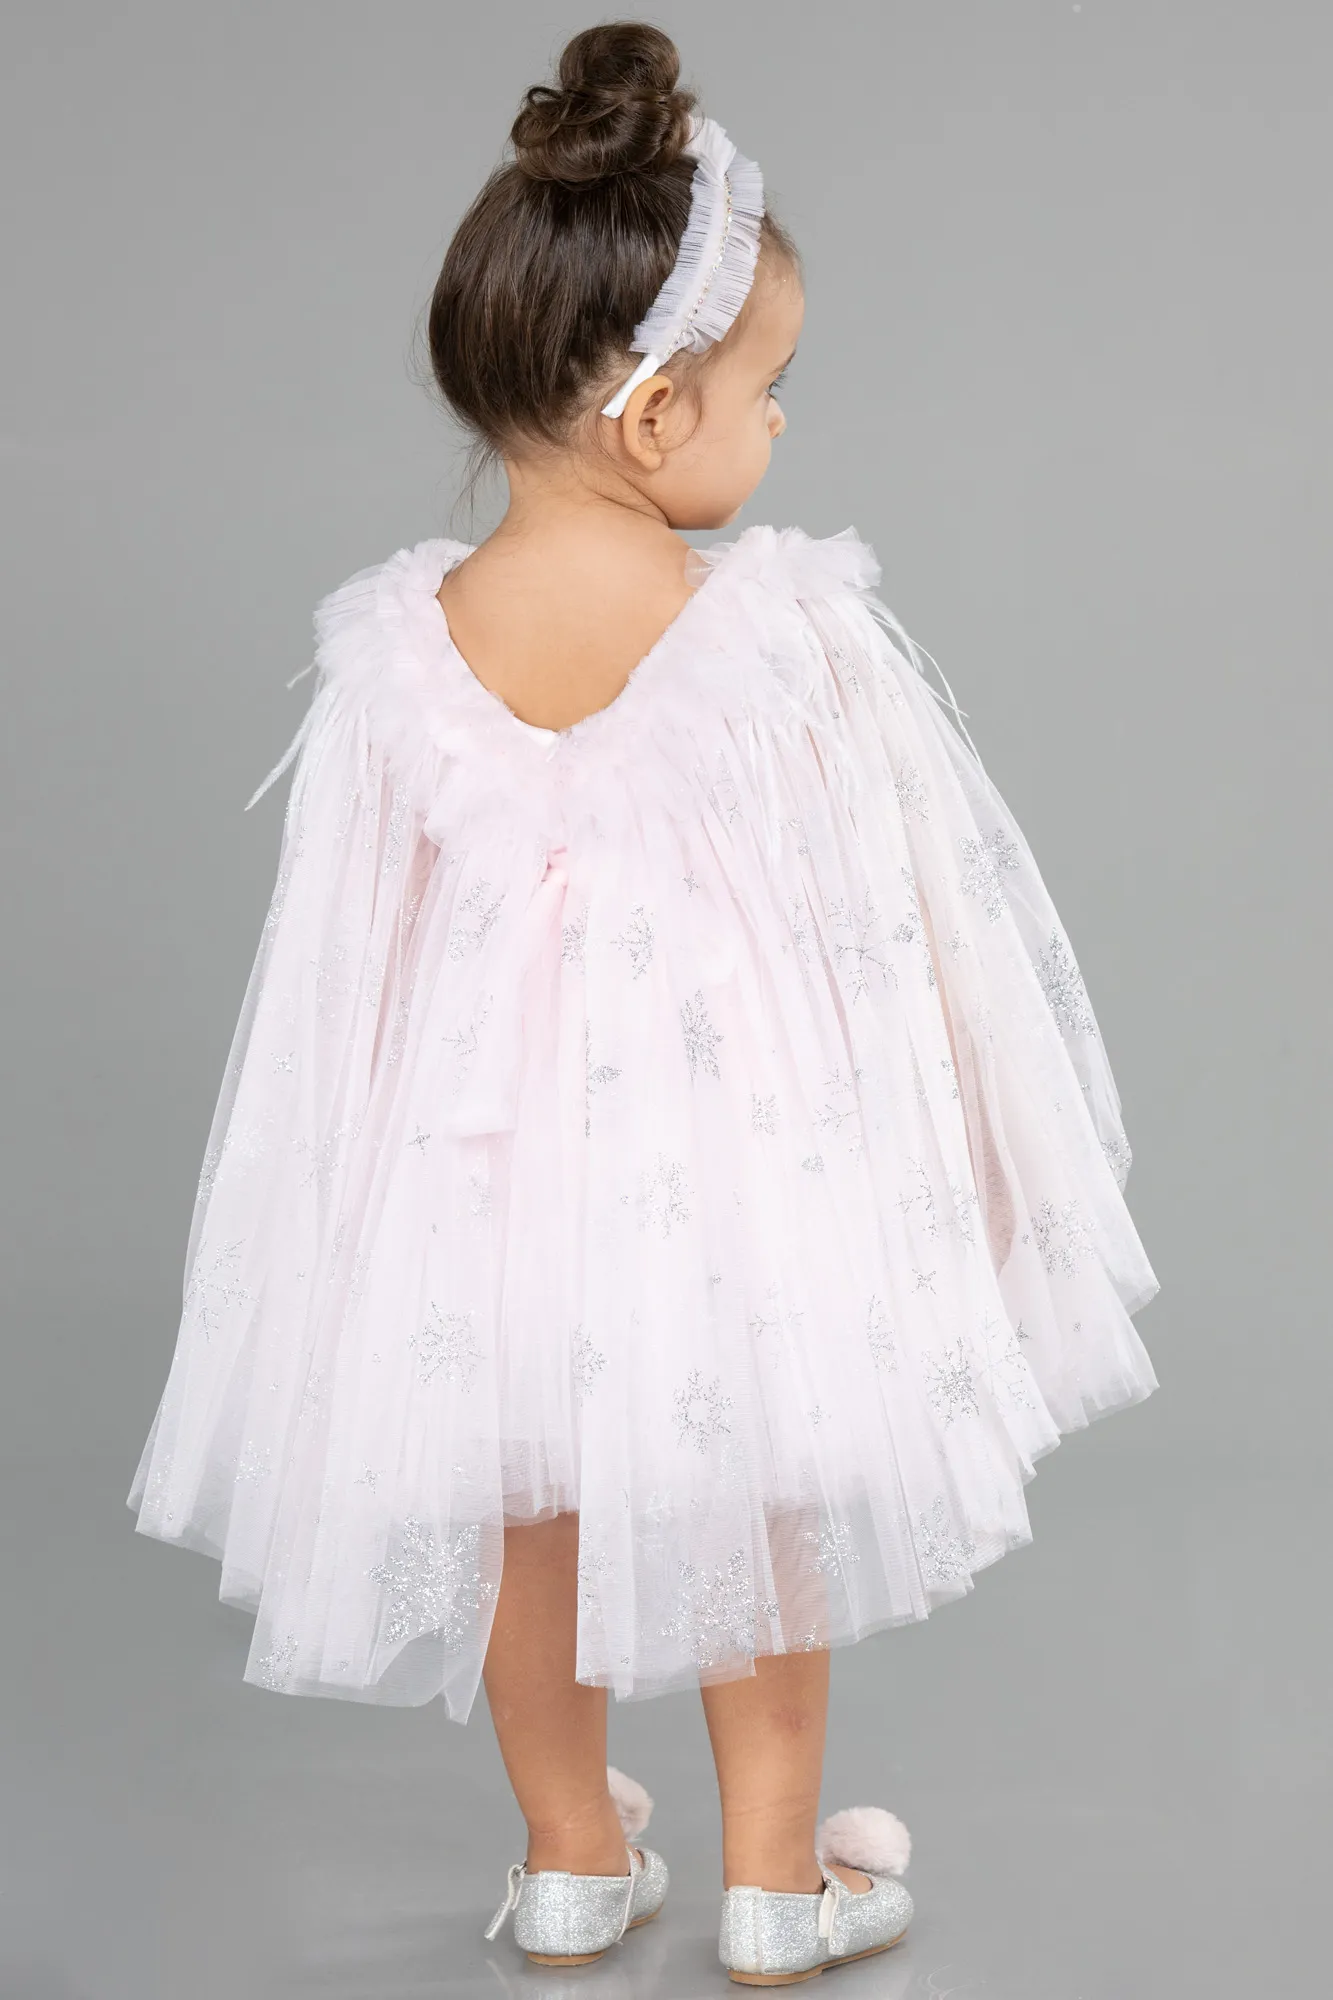 Powder Color-Short Girl Dress ABK1770